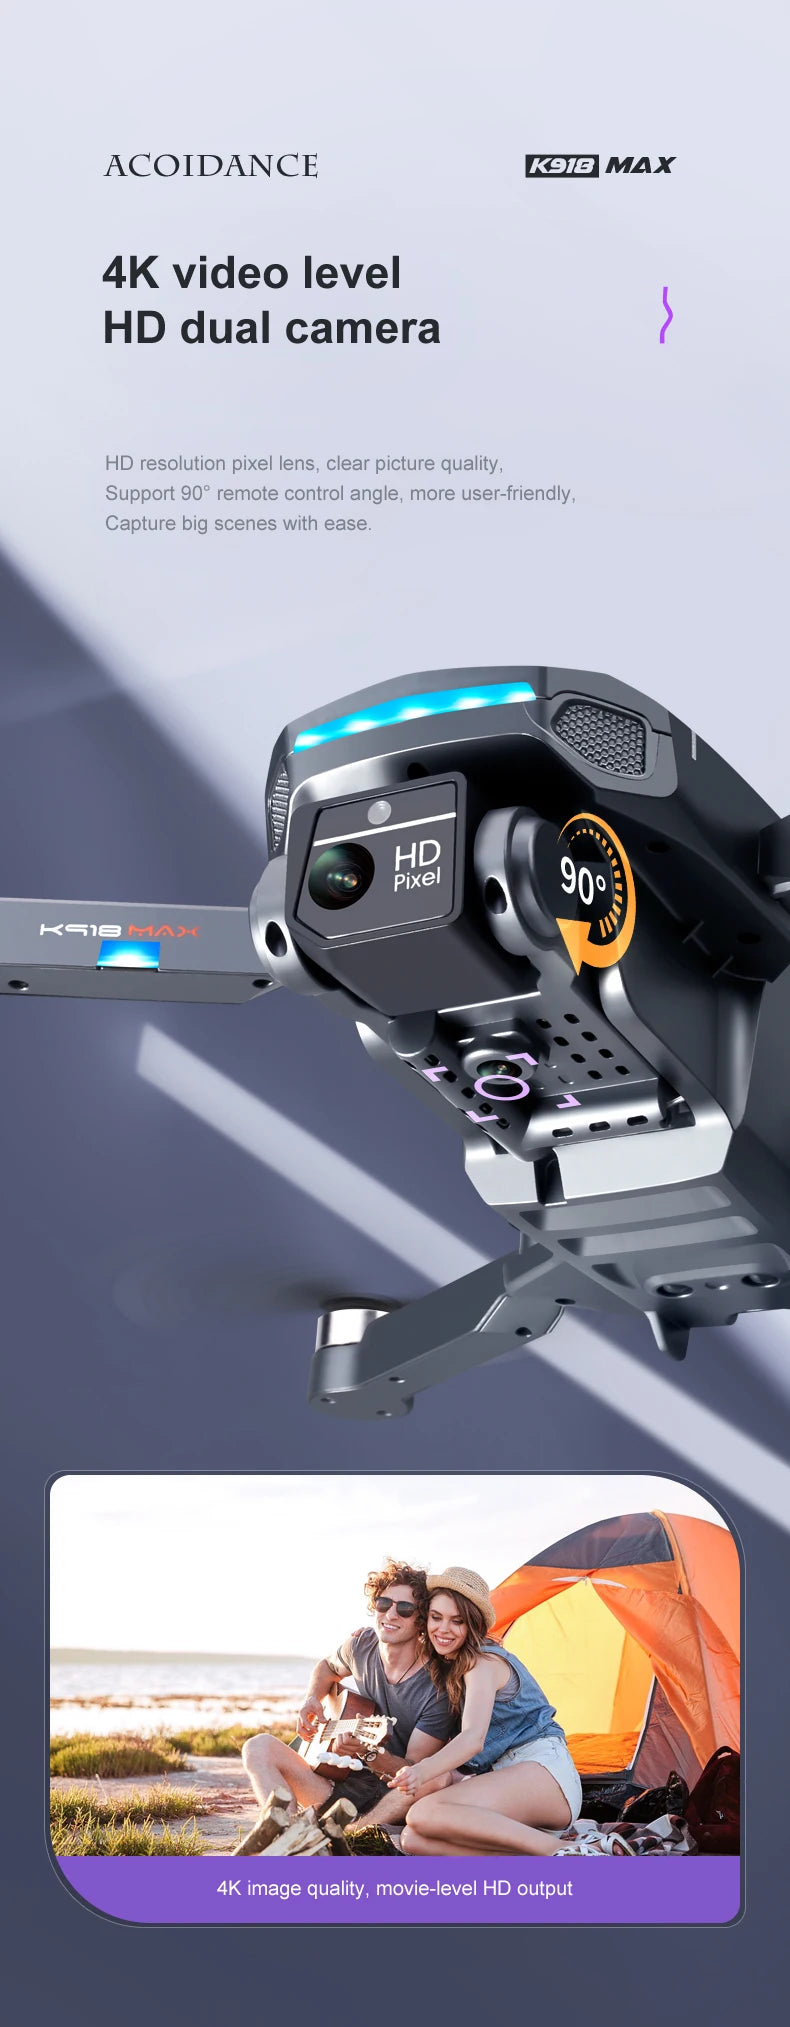 XYRC K918 MAX GPS Drone, ACOIDANCE K91O MAX 4K video level HD dual camera HD resolution 